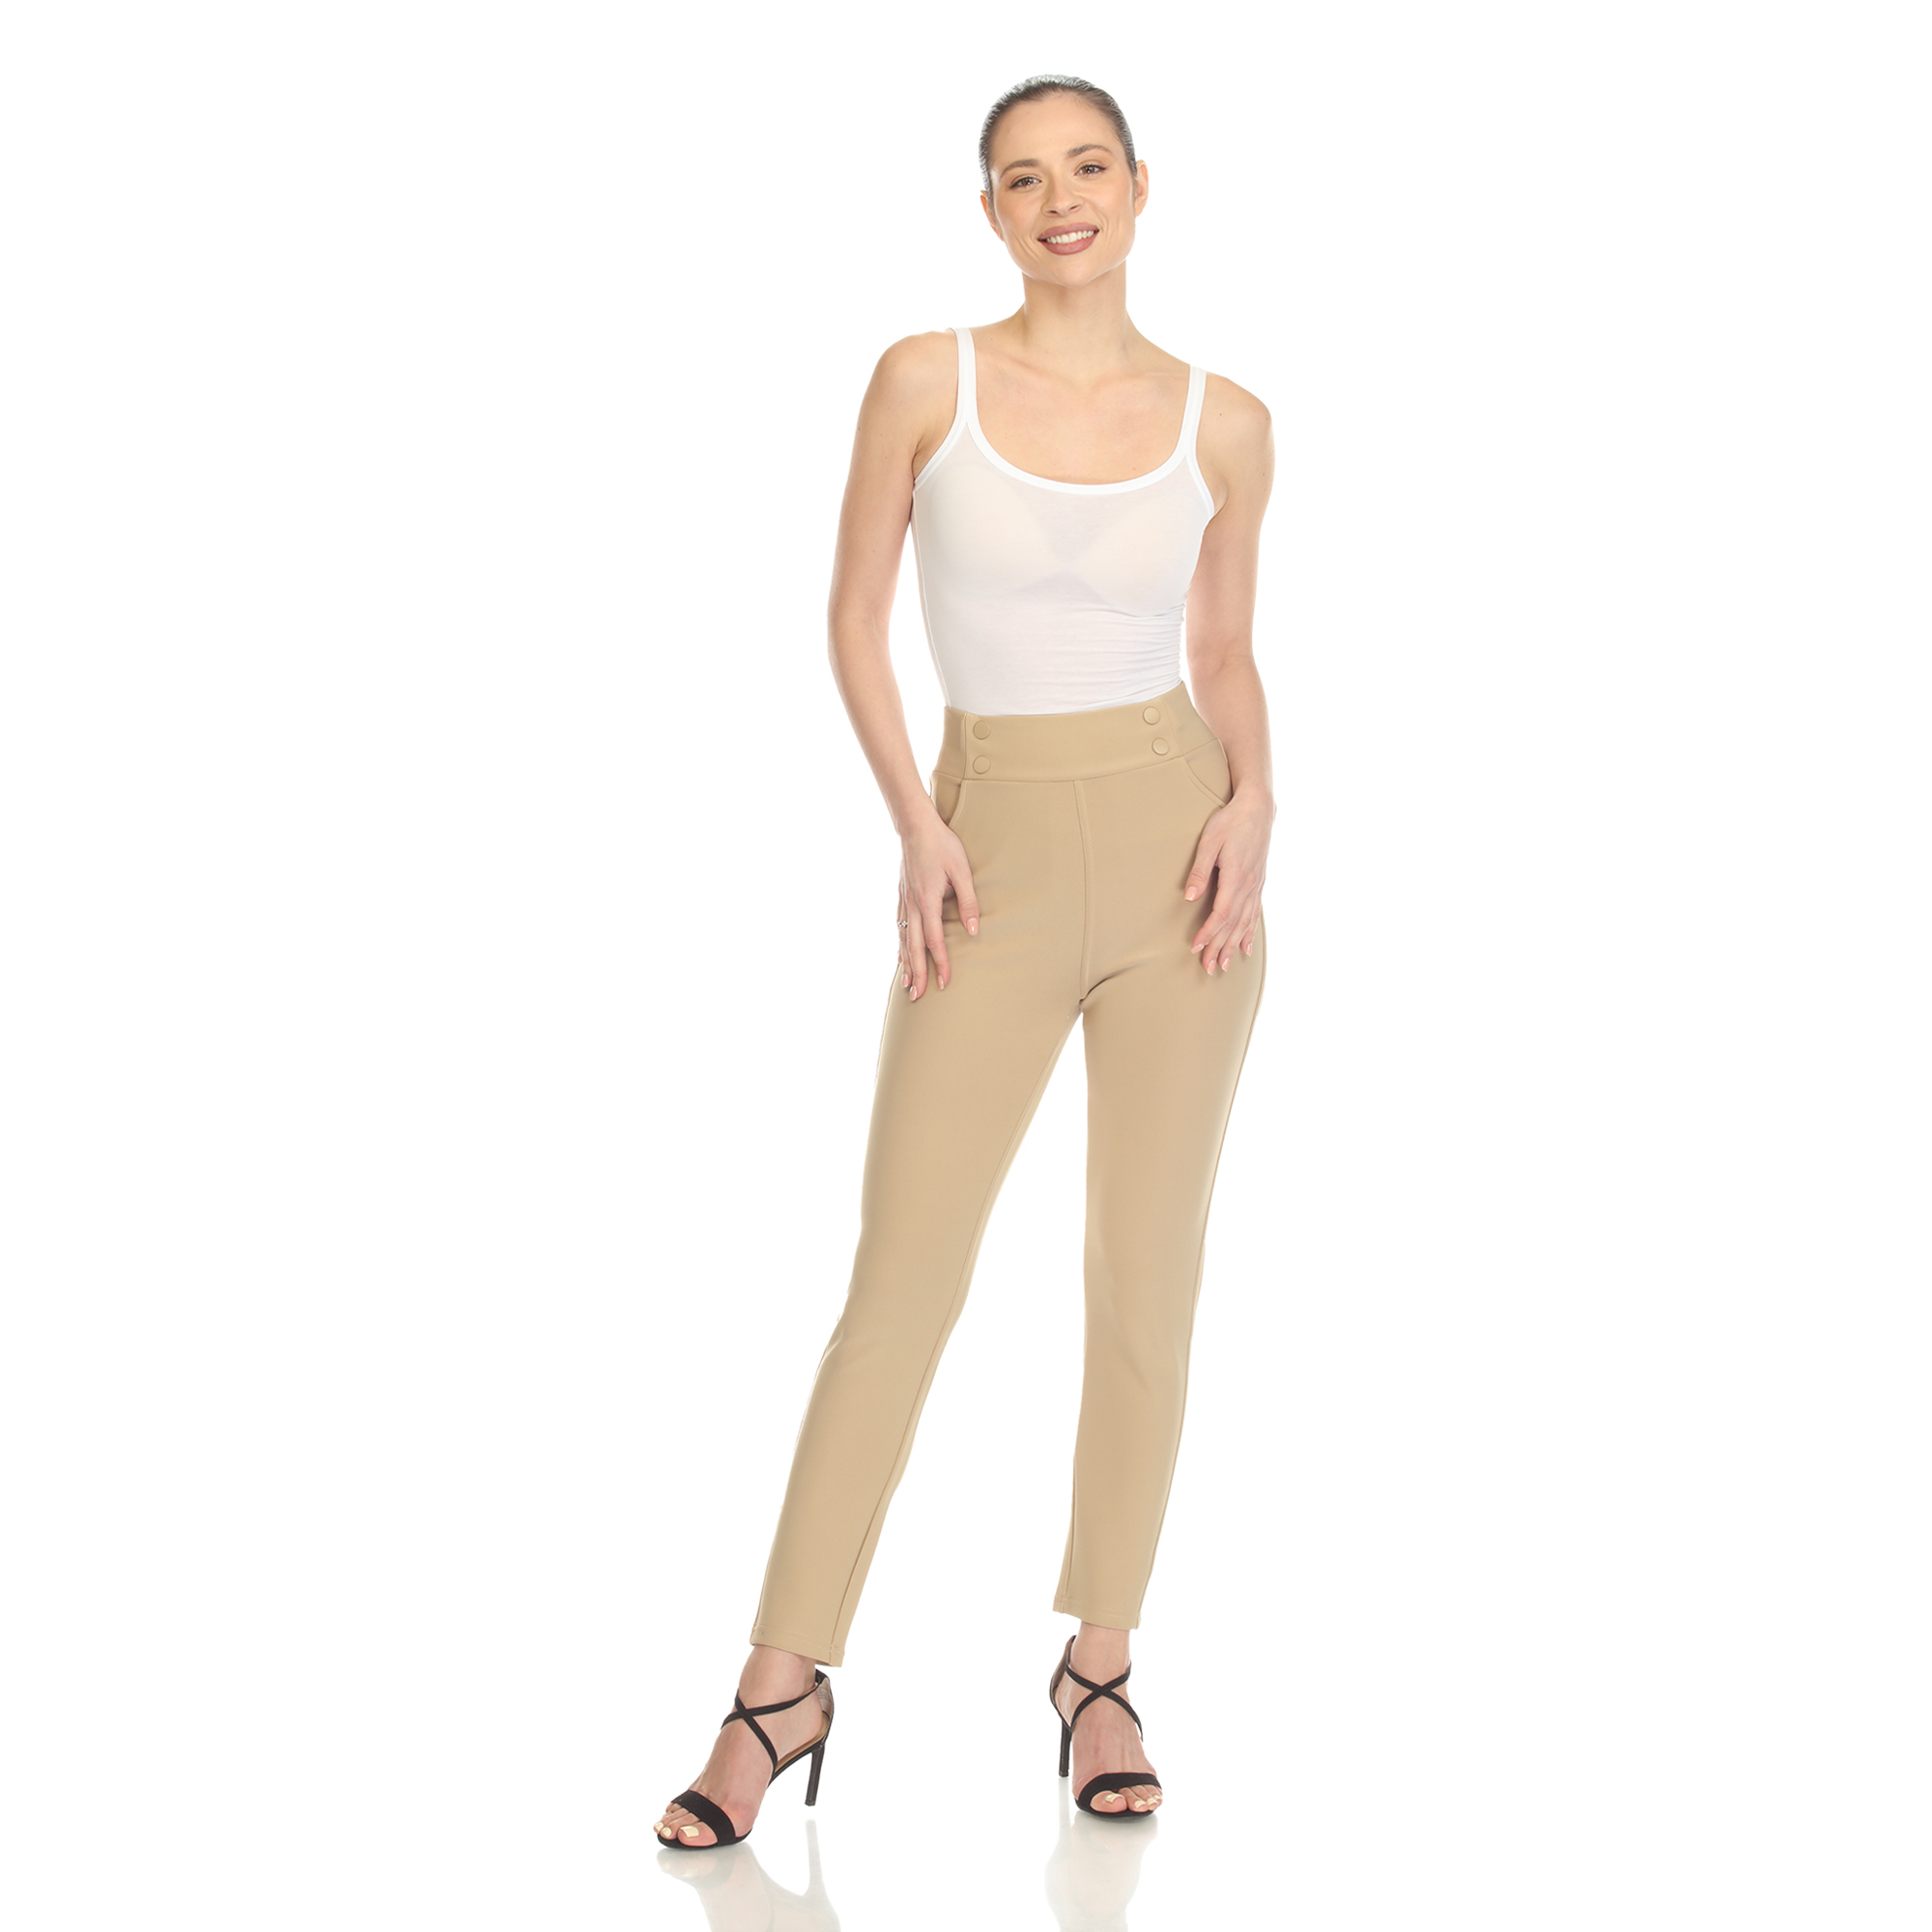 White Mark Women's Super Soft Elastic Waistband High Waist Scuba Pants With Pockets - Beige, Medium